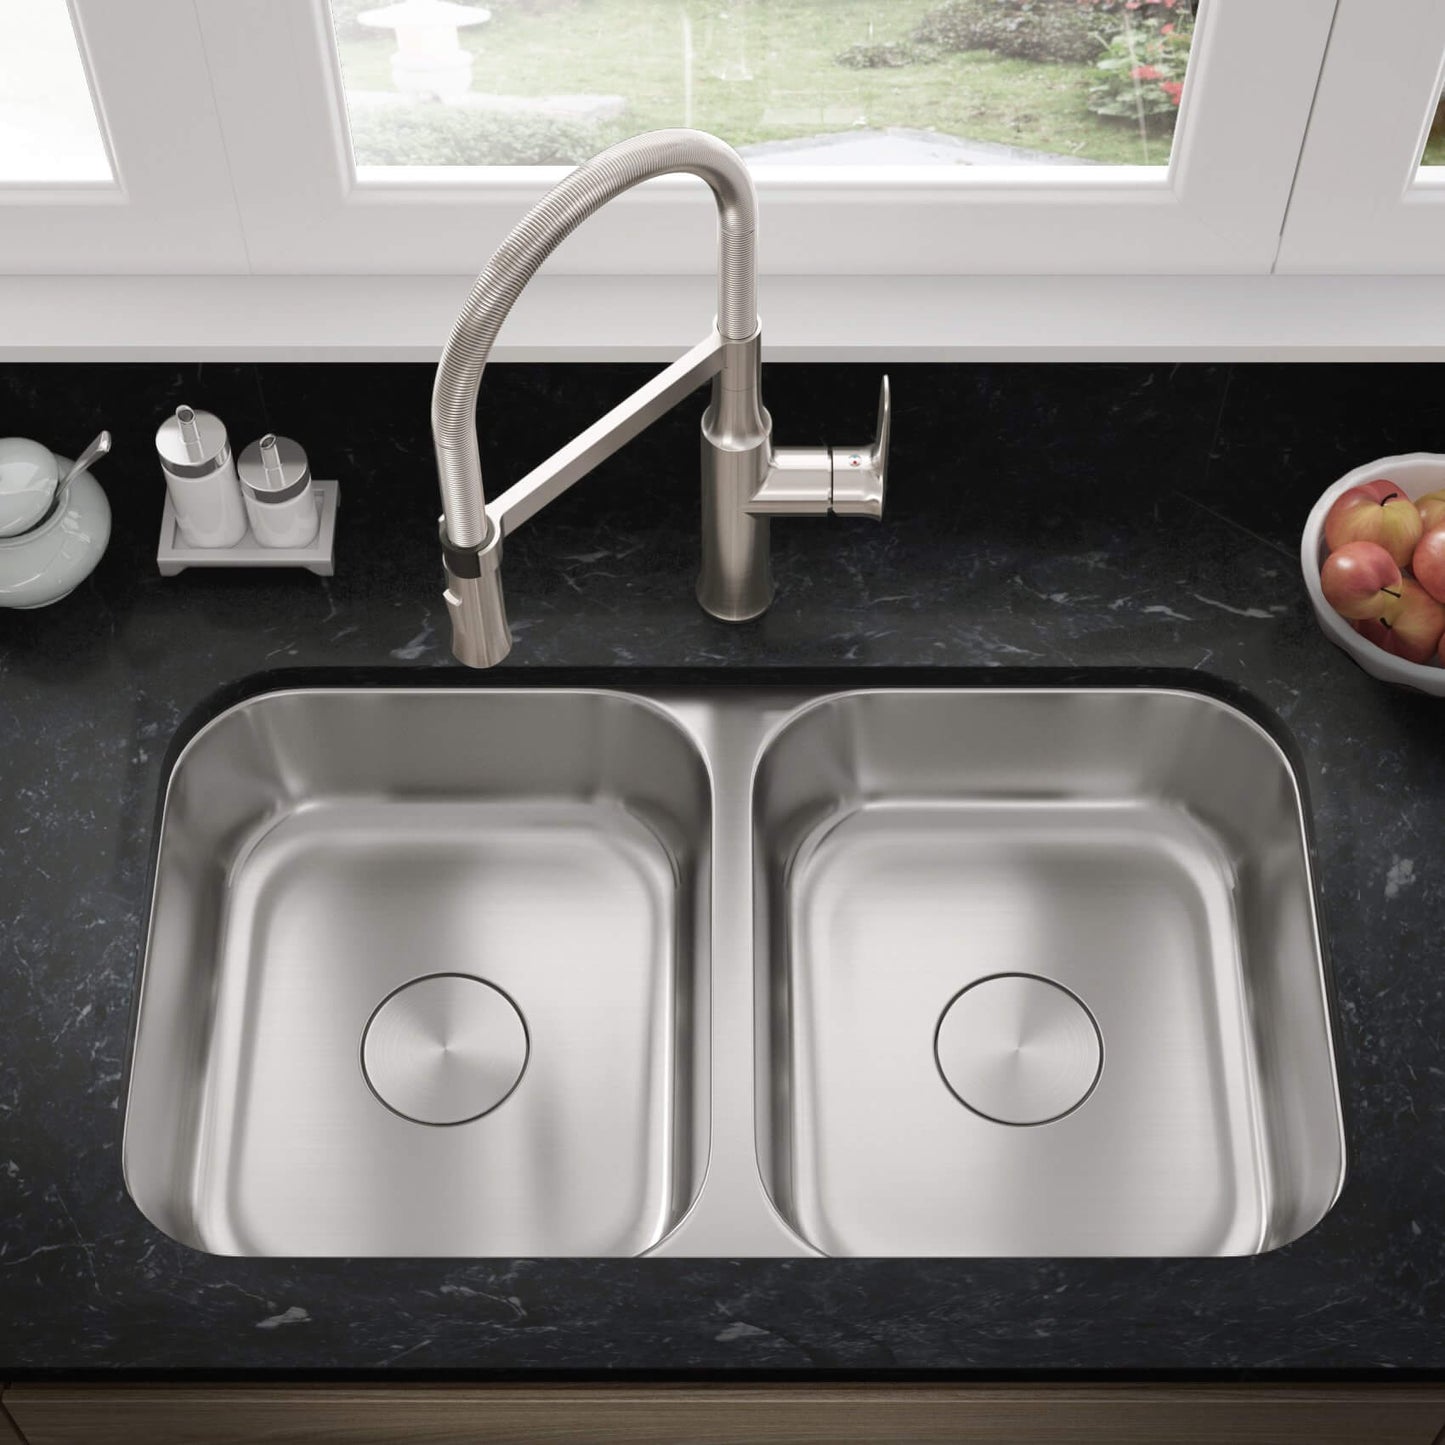 ADA-KSN-3118-D Double Bowl Undermount Kitchen Sink